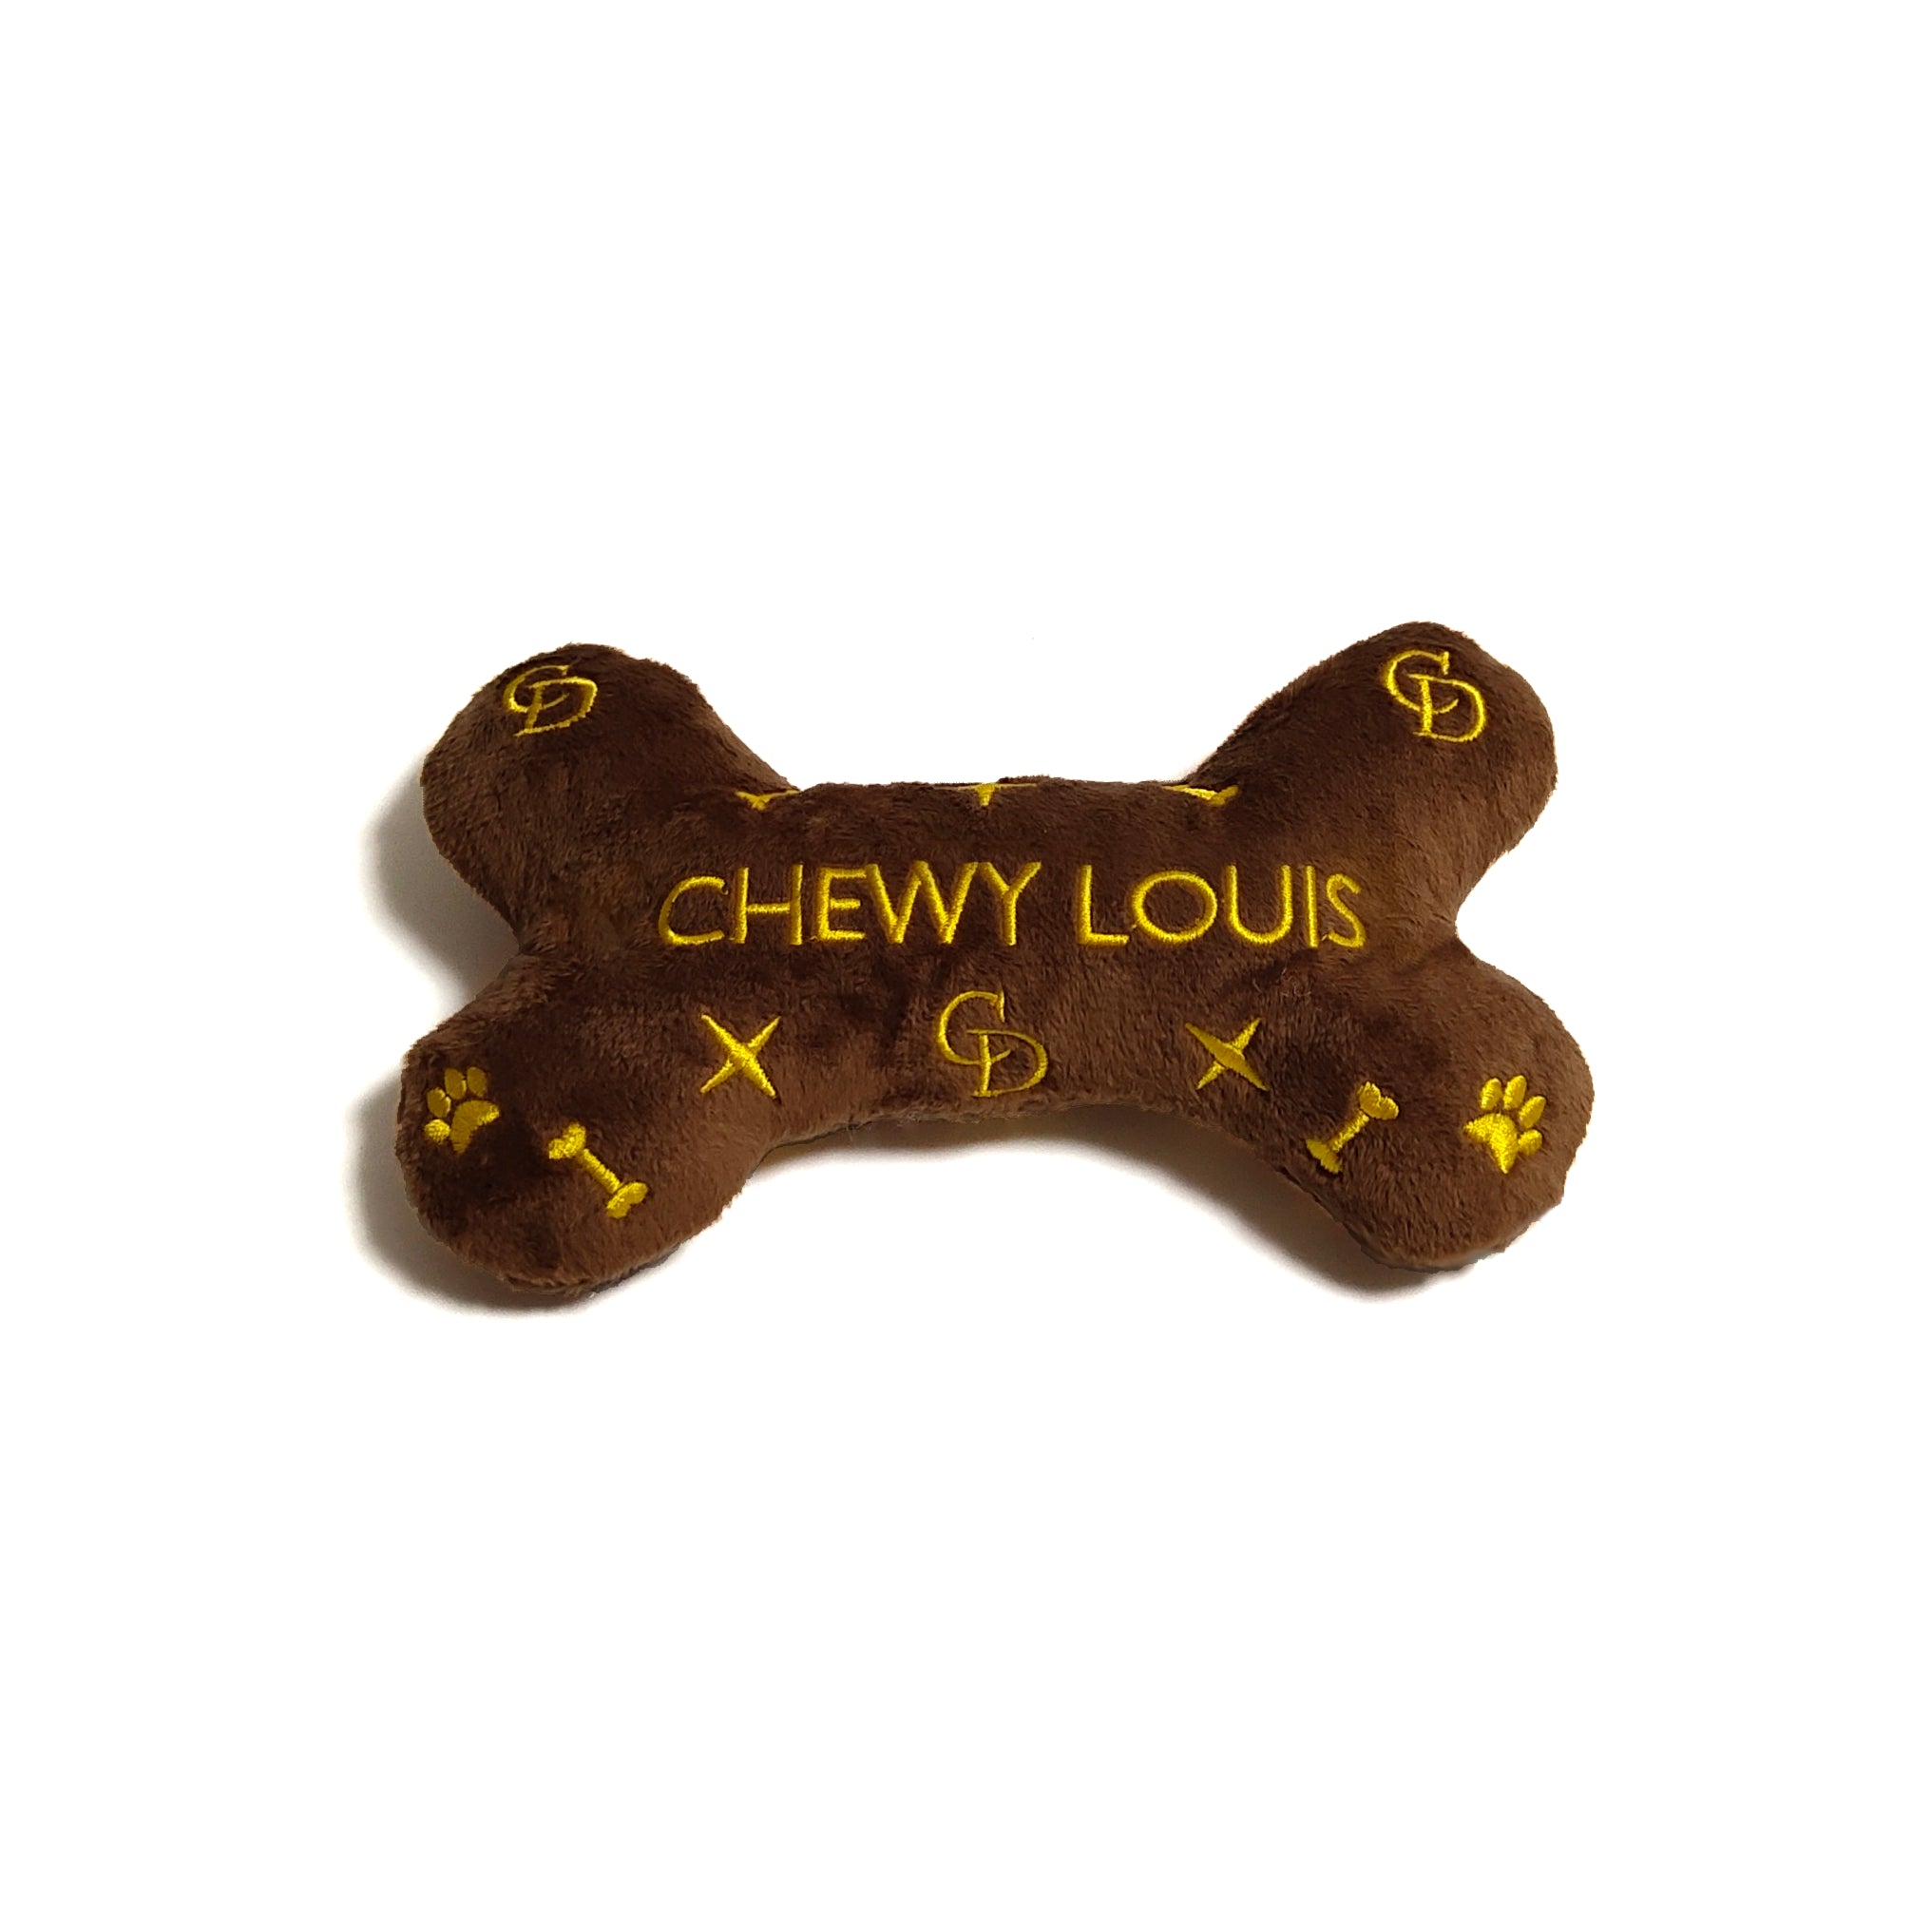 Chewy Louis Bone Dog Toy